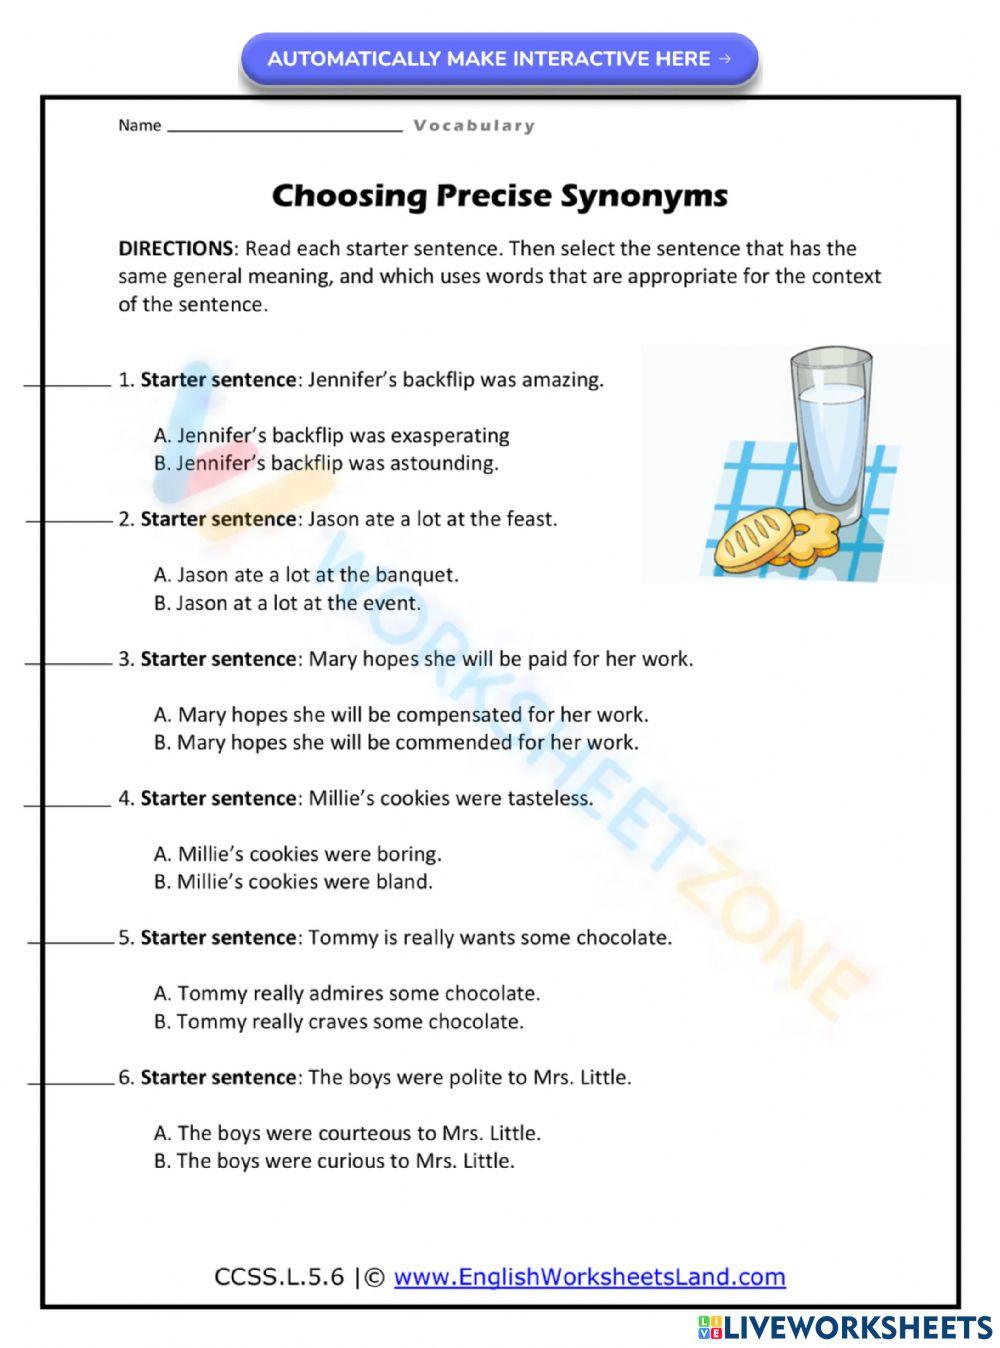 5th grade synonym worksheets 4